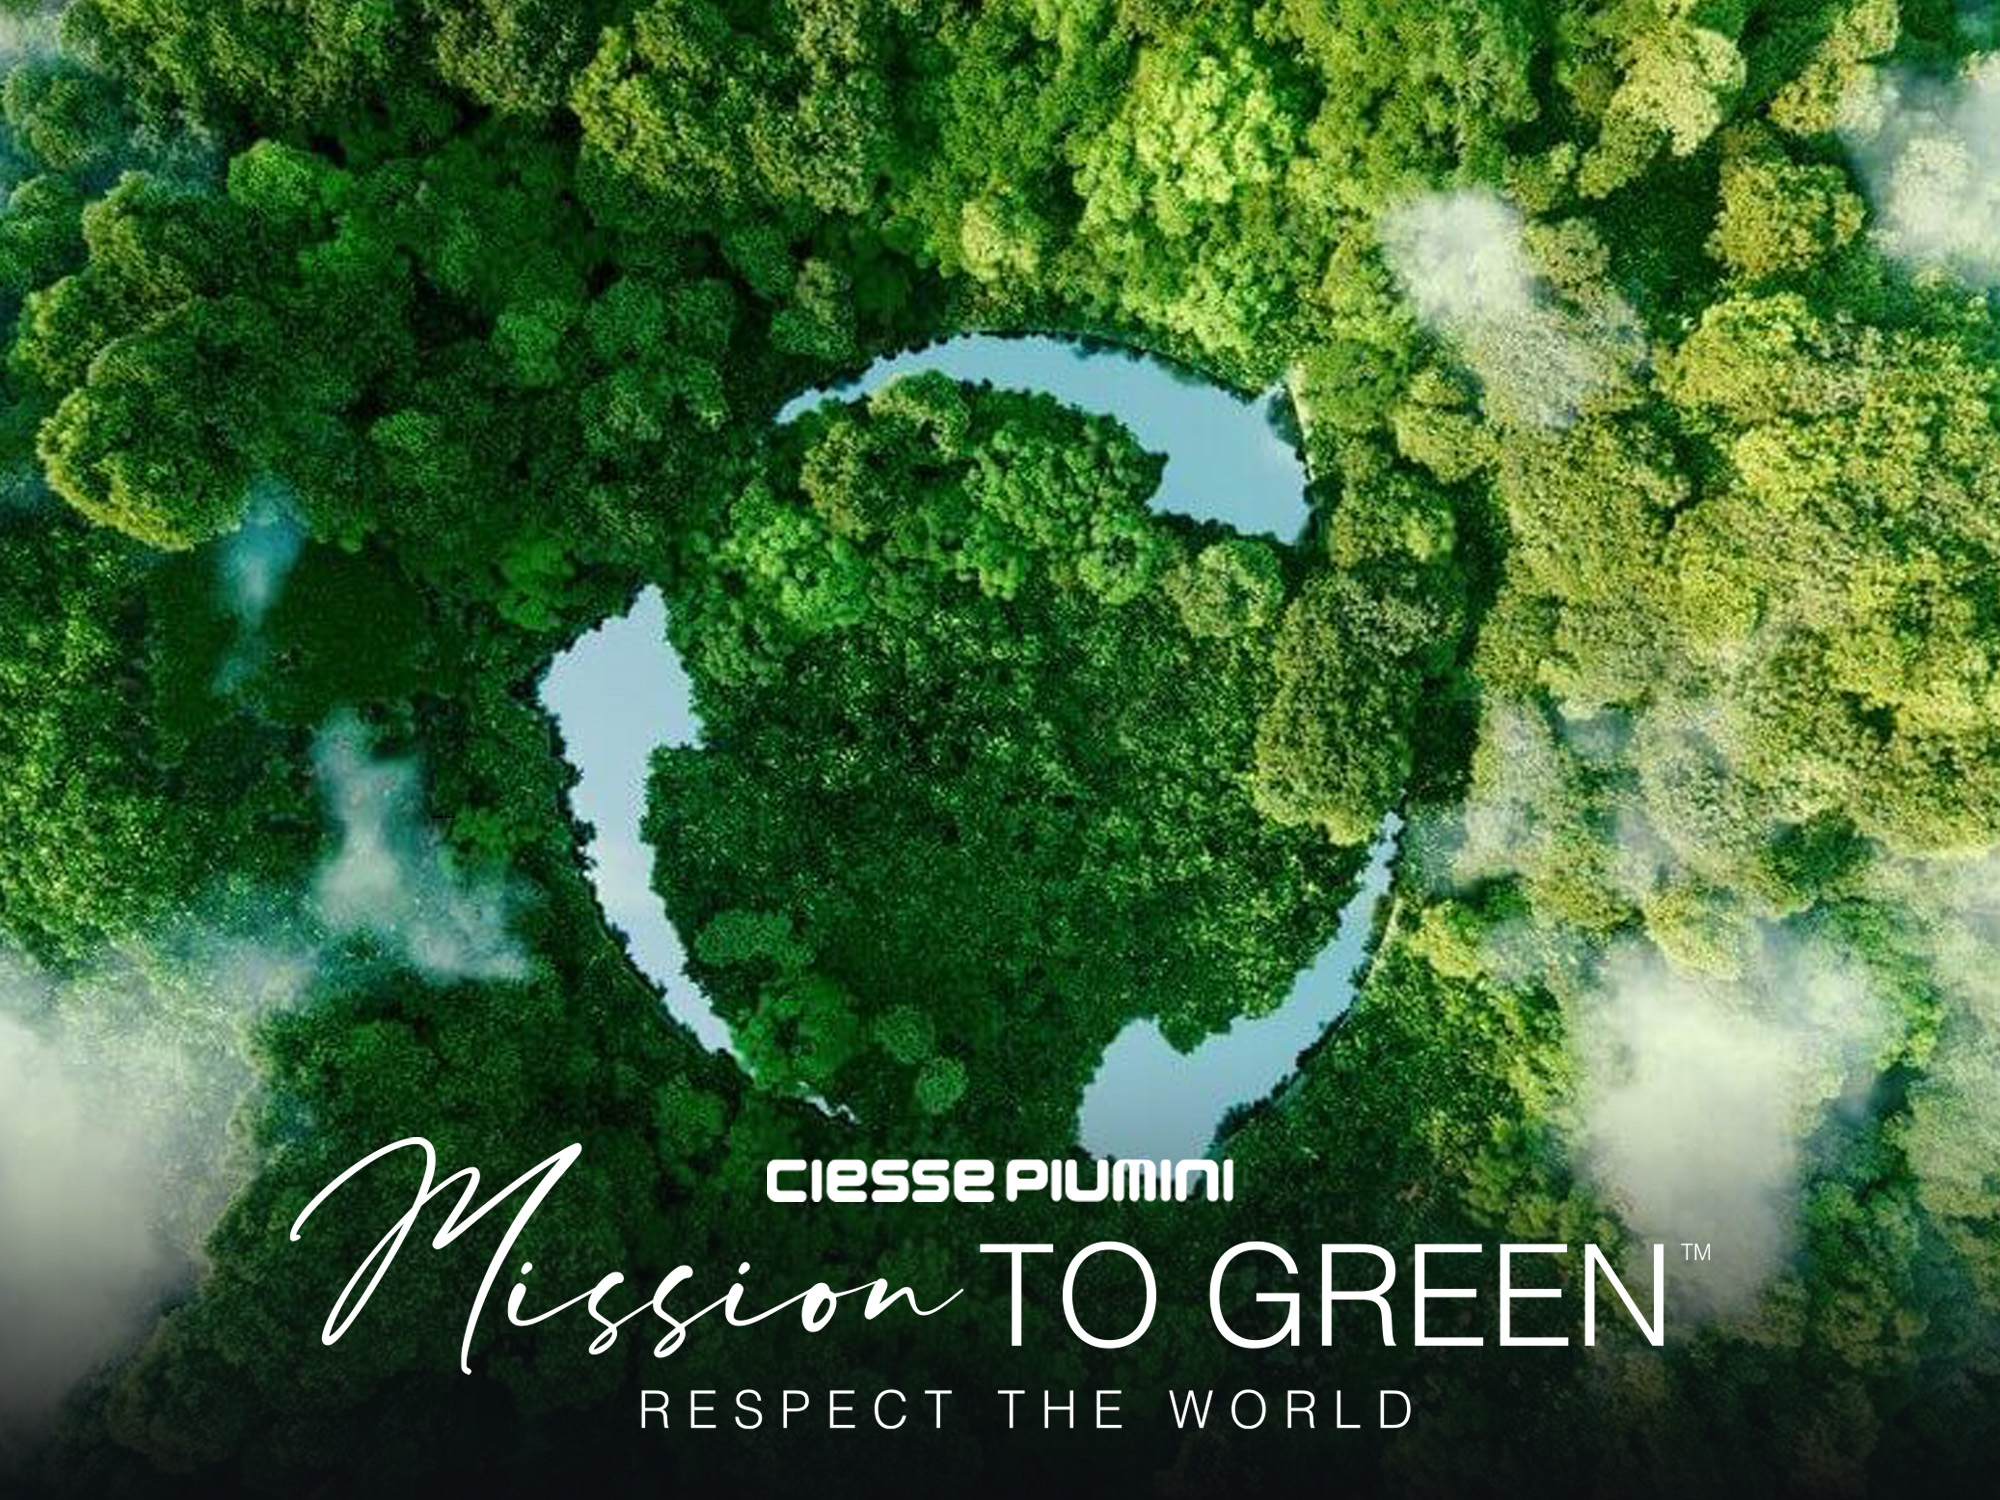 ciesse piumini mission to green We are ciesse piumini